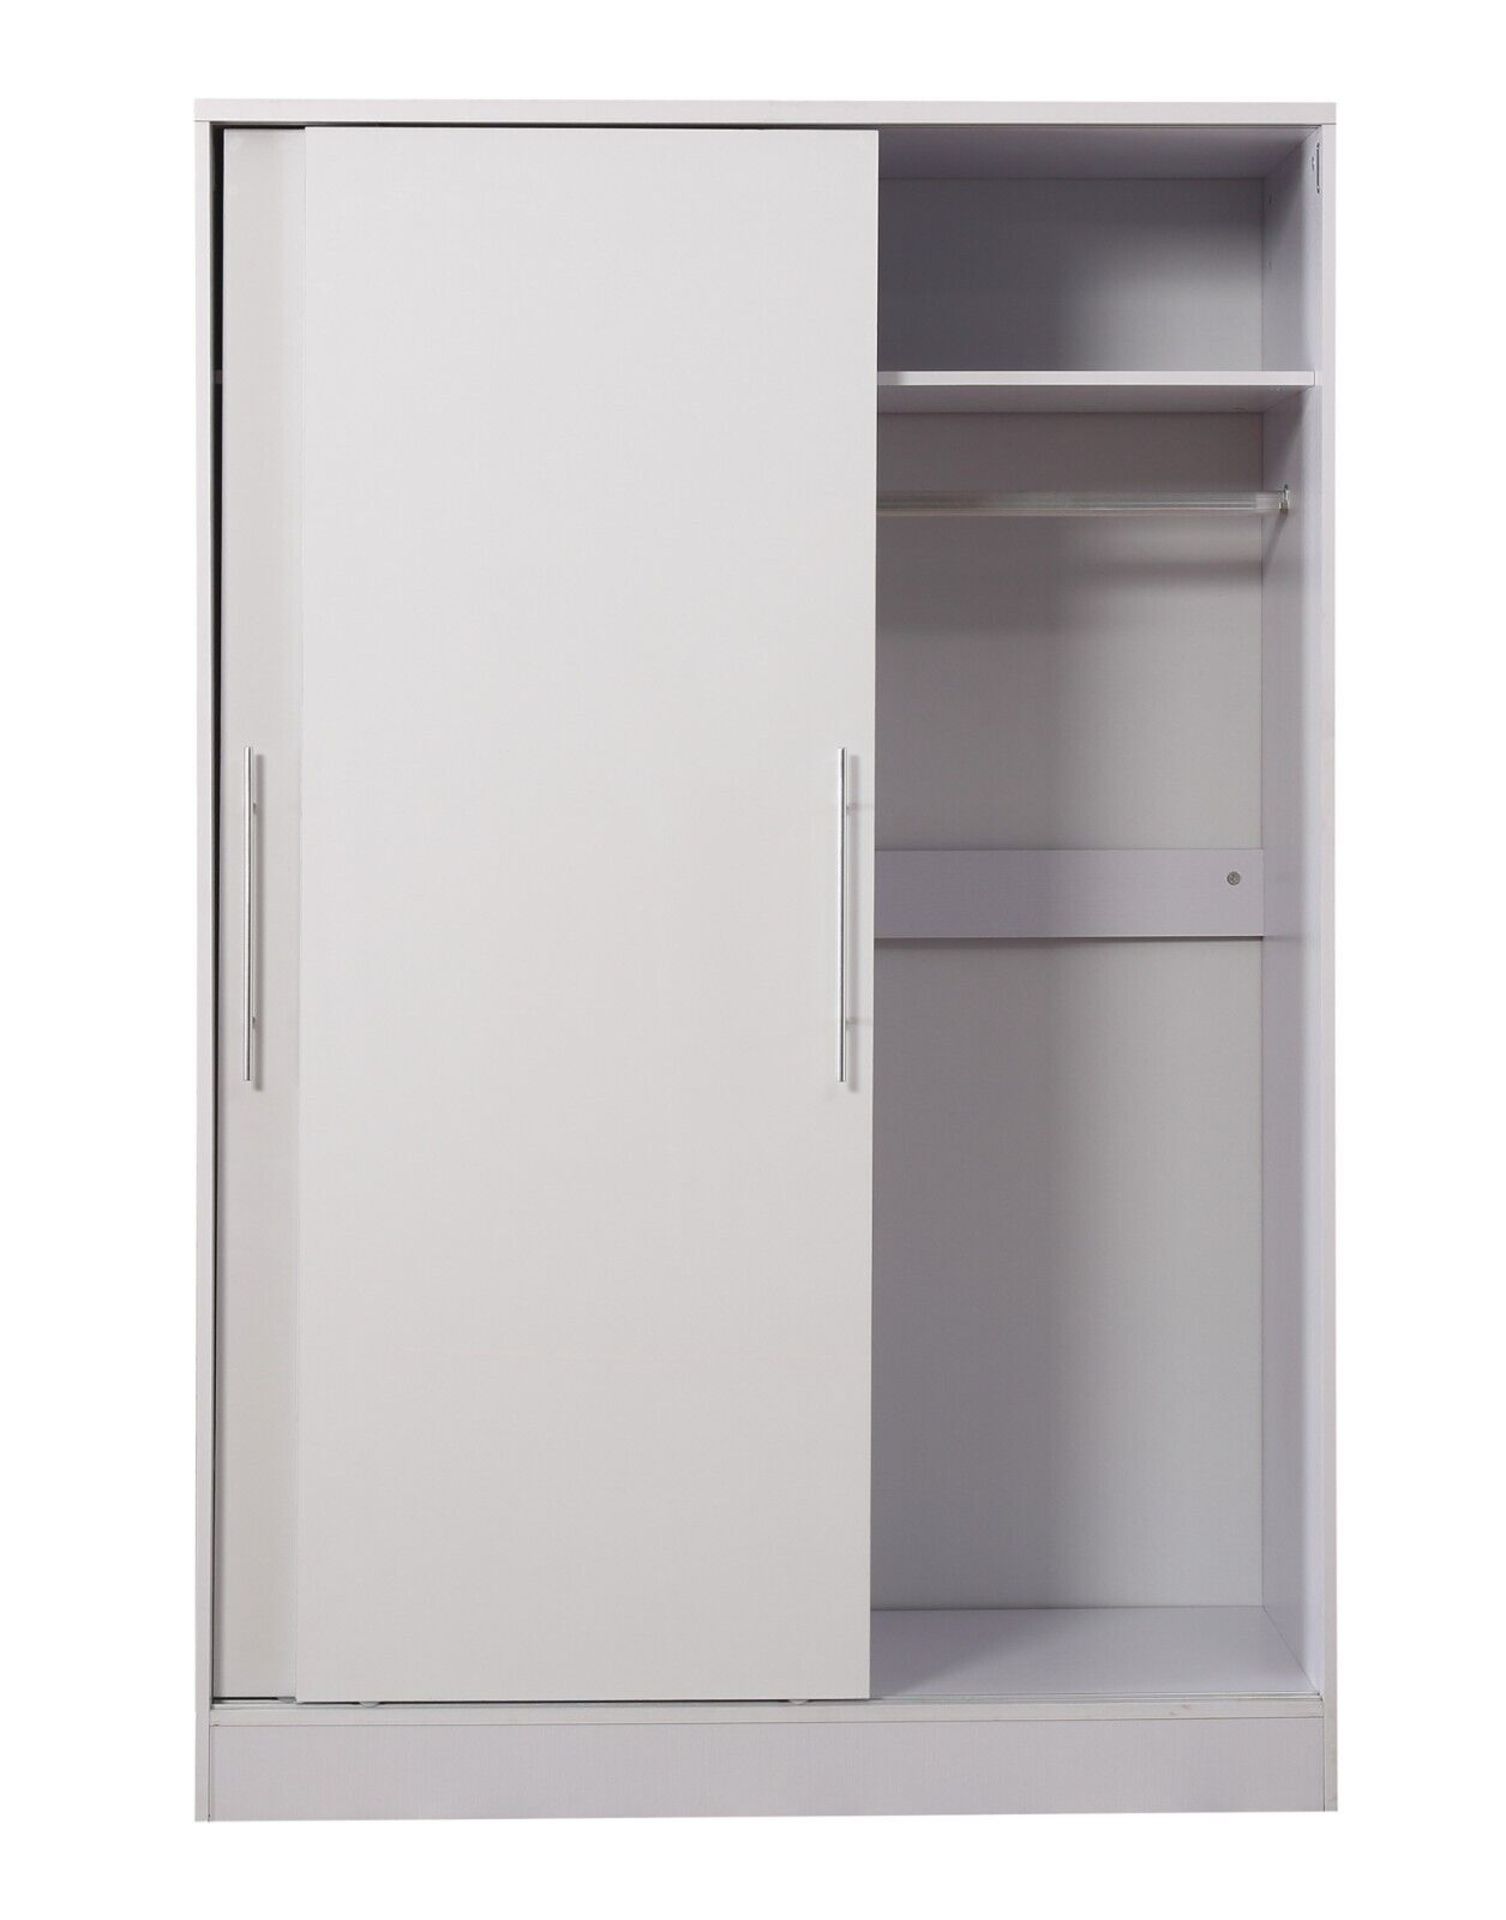 2 DOOR SLIDING WARDROBE XL HIGH GLOSS BEDROOM FURNITURE WHITE ON WHITE - Image 6 of 8